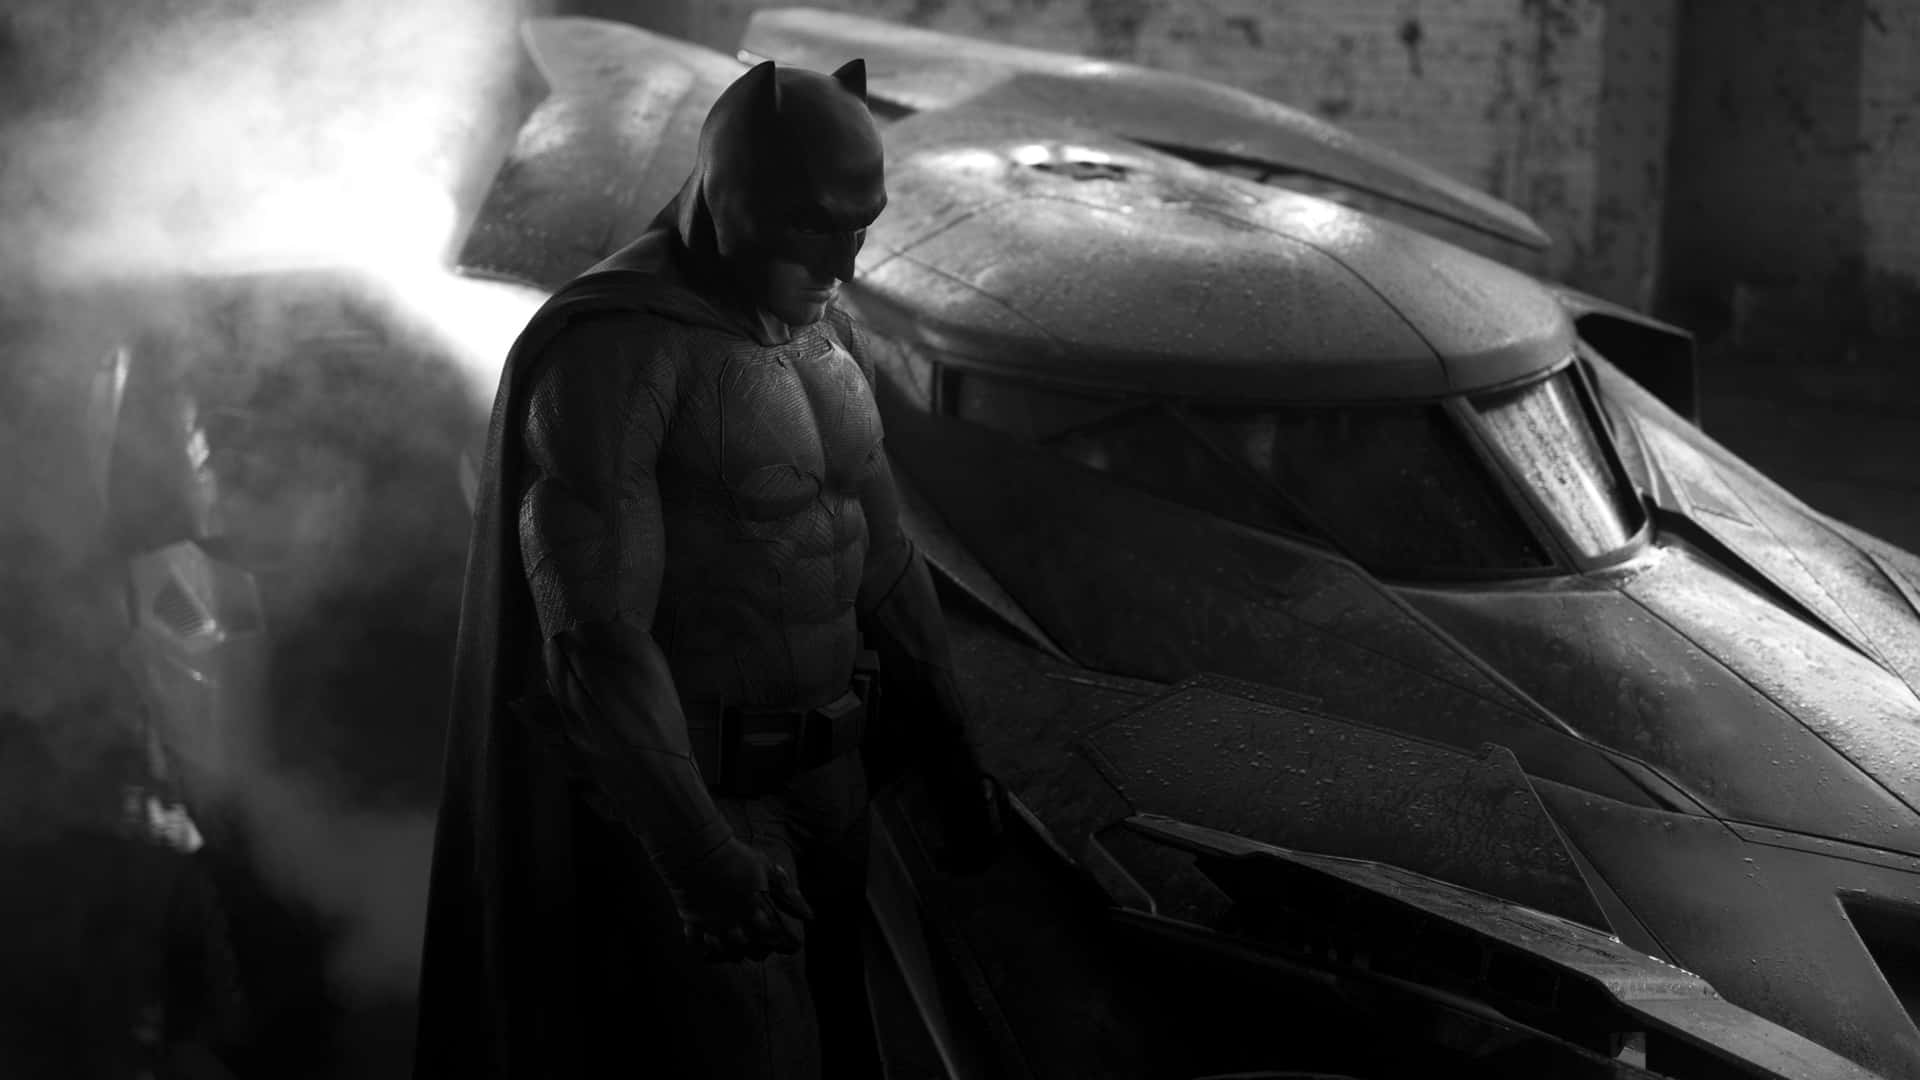 Bruce Wayne - The Man Behind the Mask Wallpaper